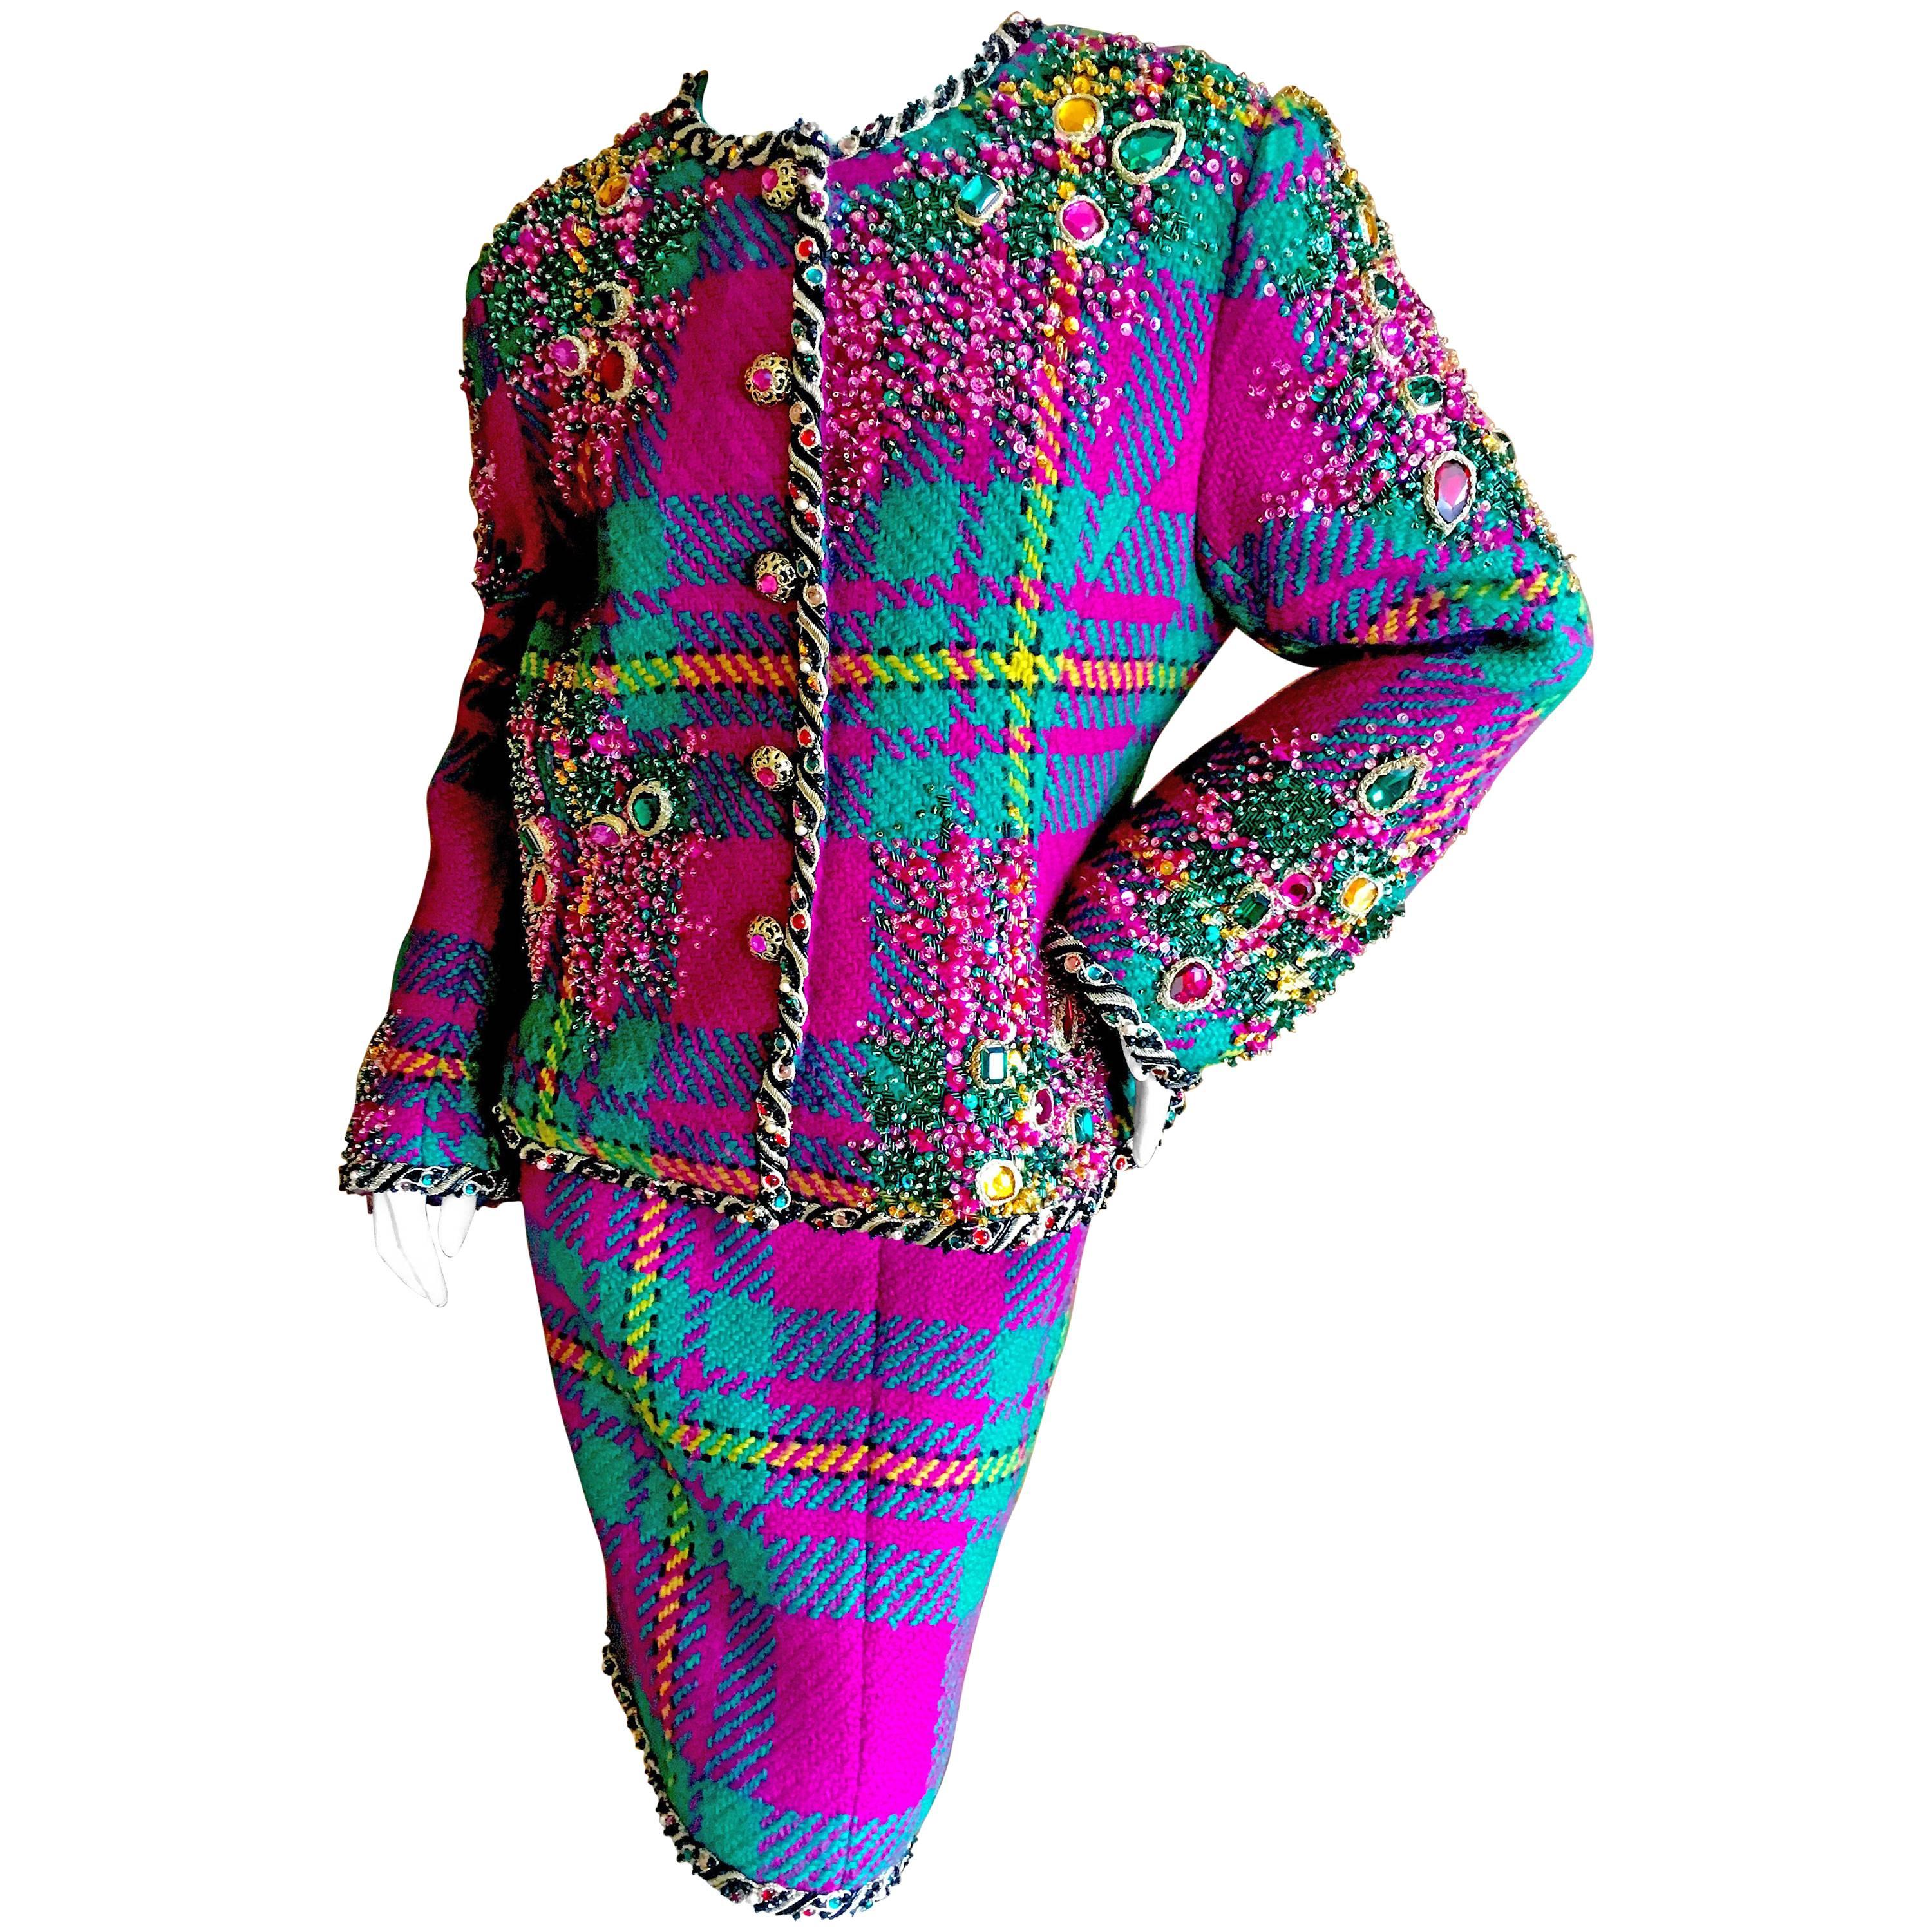 Oscar de la Renta 1980's Museum Exhibited Jewel Embellished Plaid Suit  For Sale